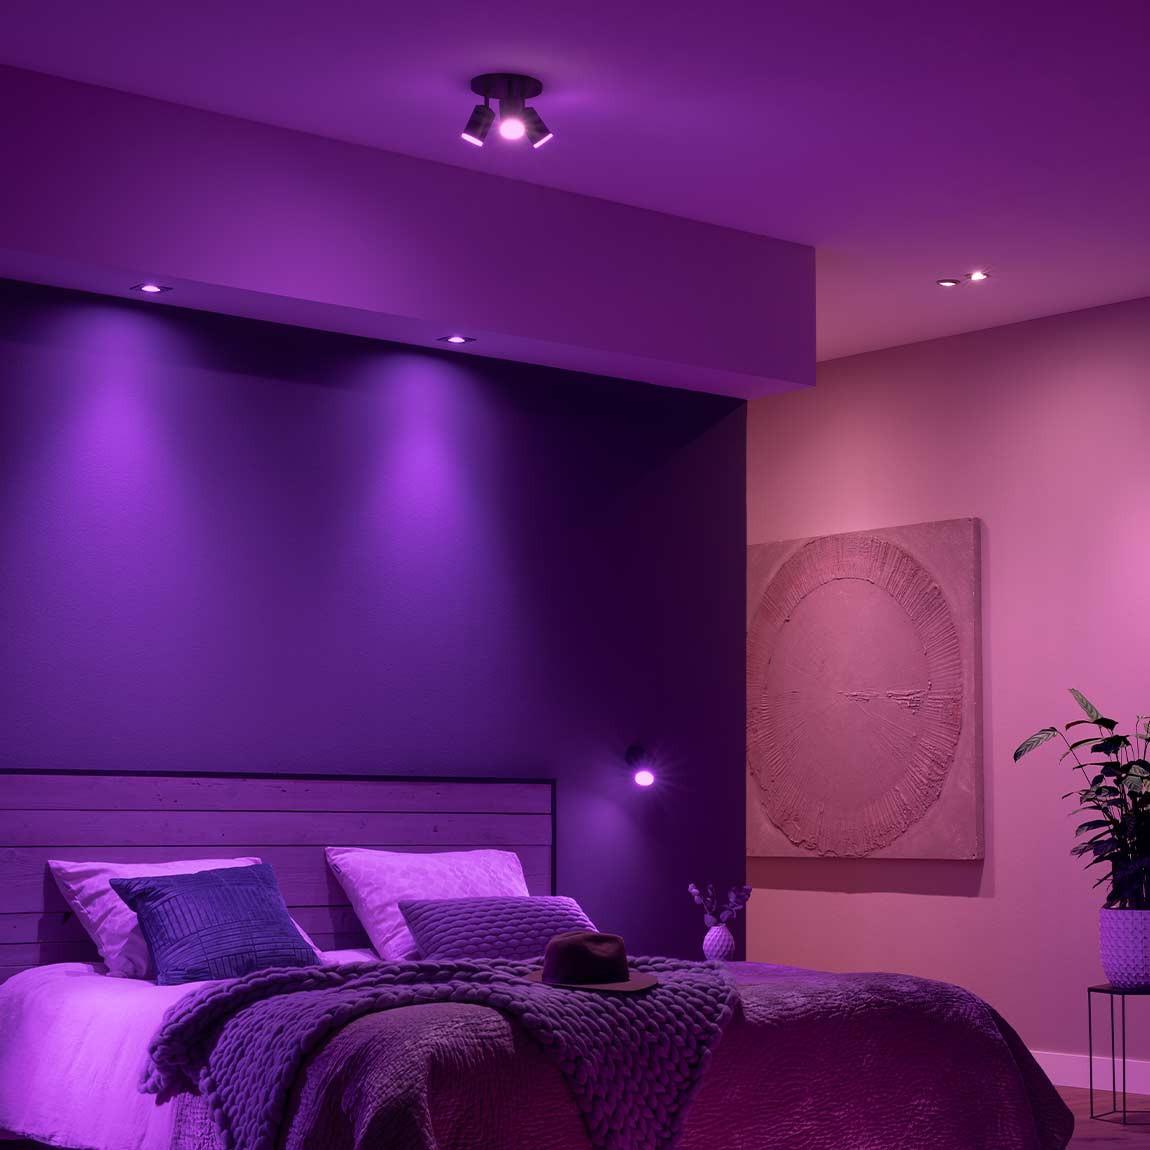 Philips Hue White & Color Ambiance Centura Einbauspot 1 flg. - Lifestyle Schlafzimmer